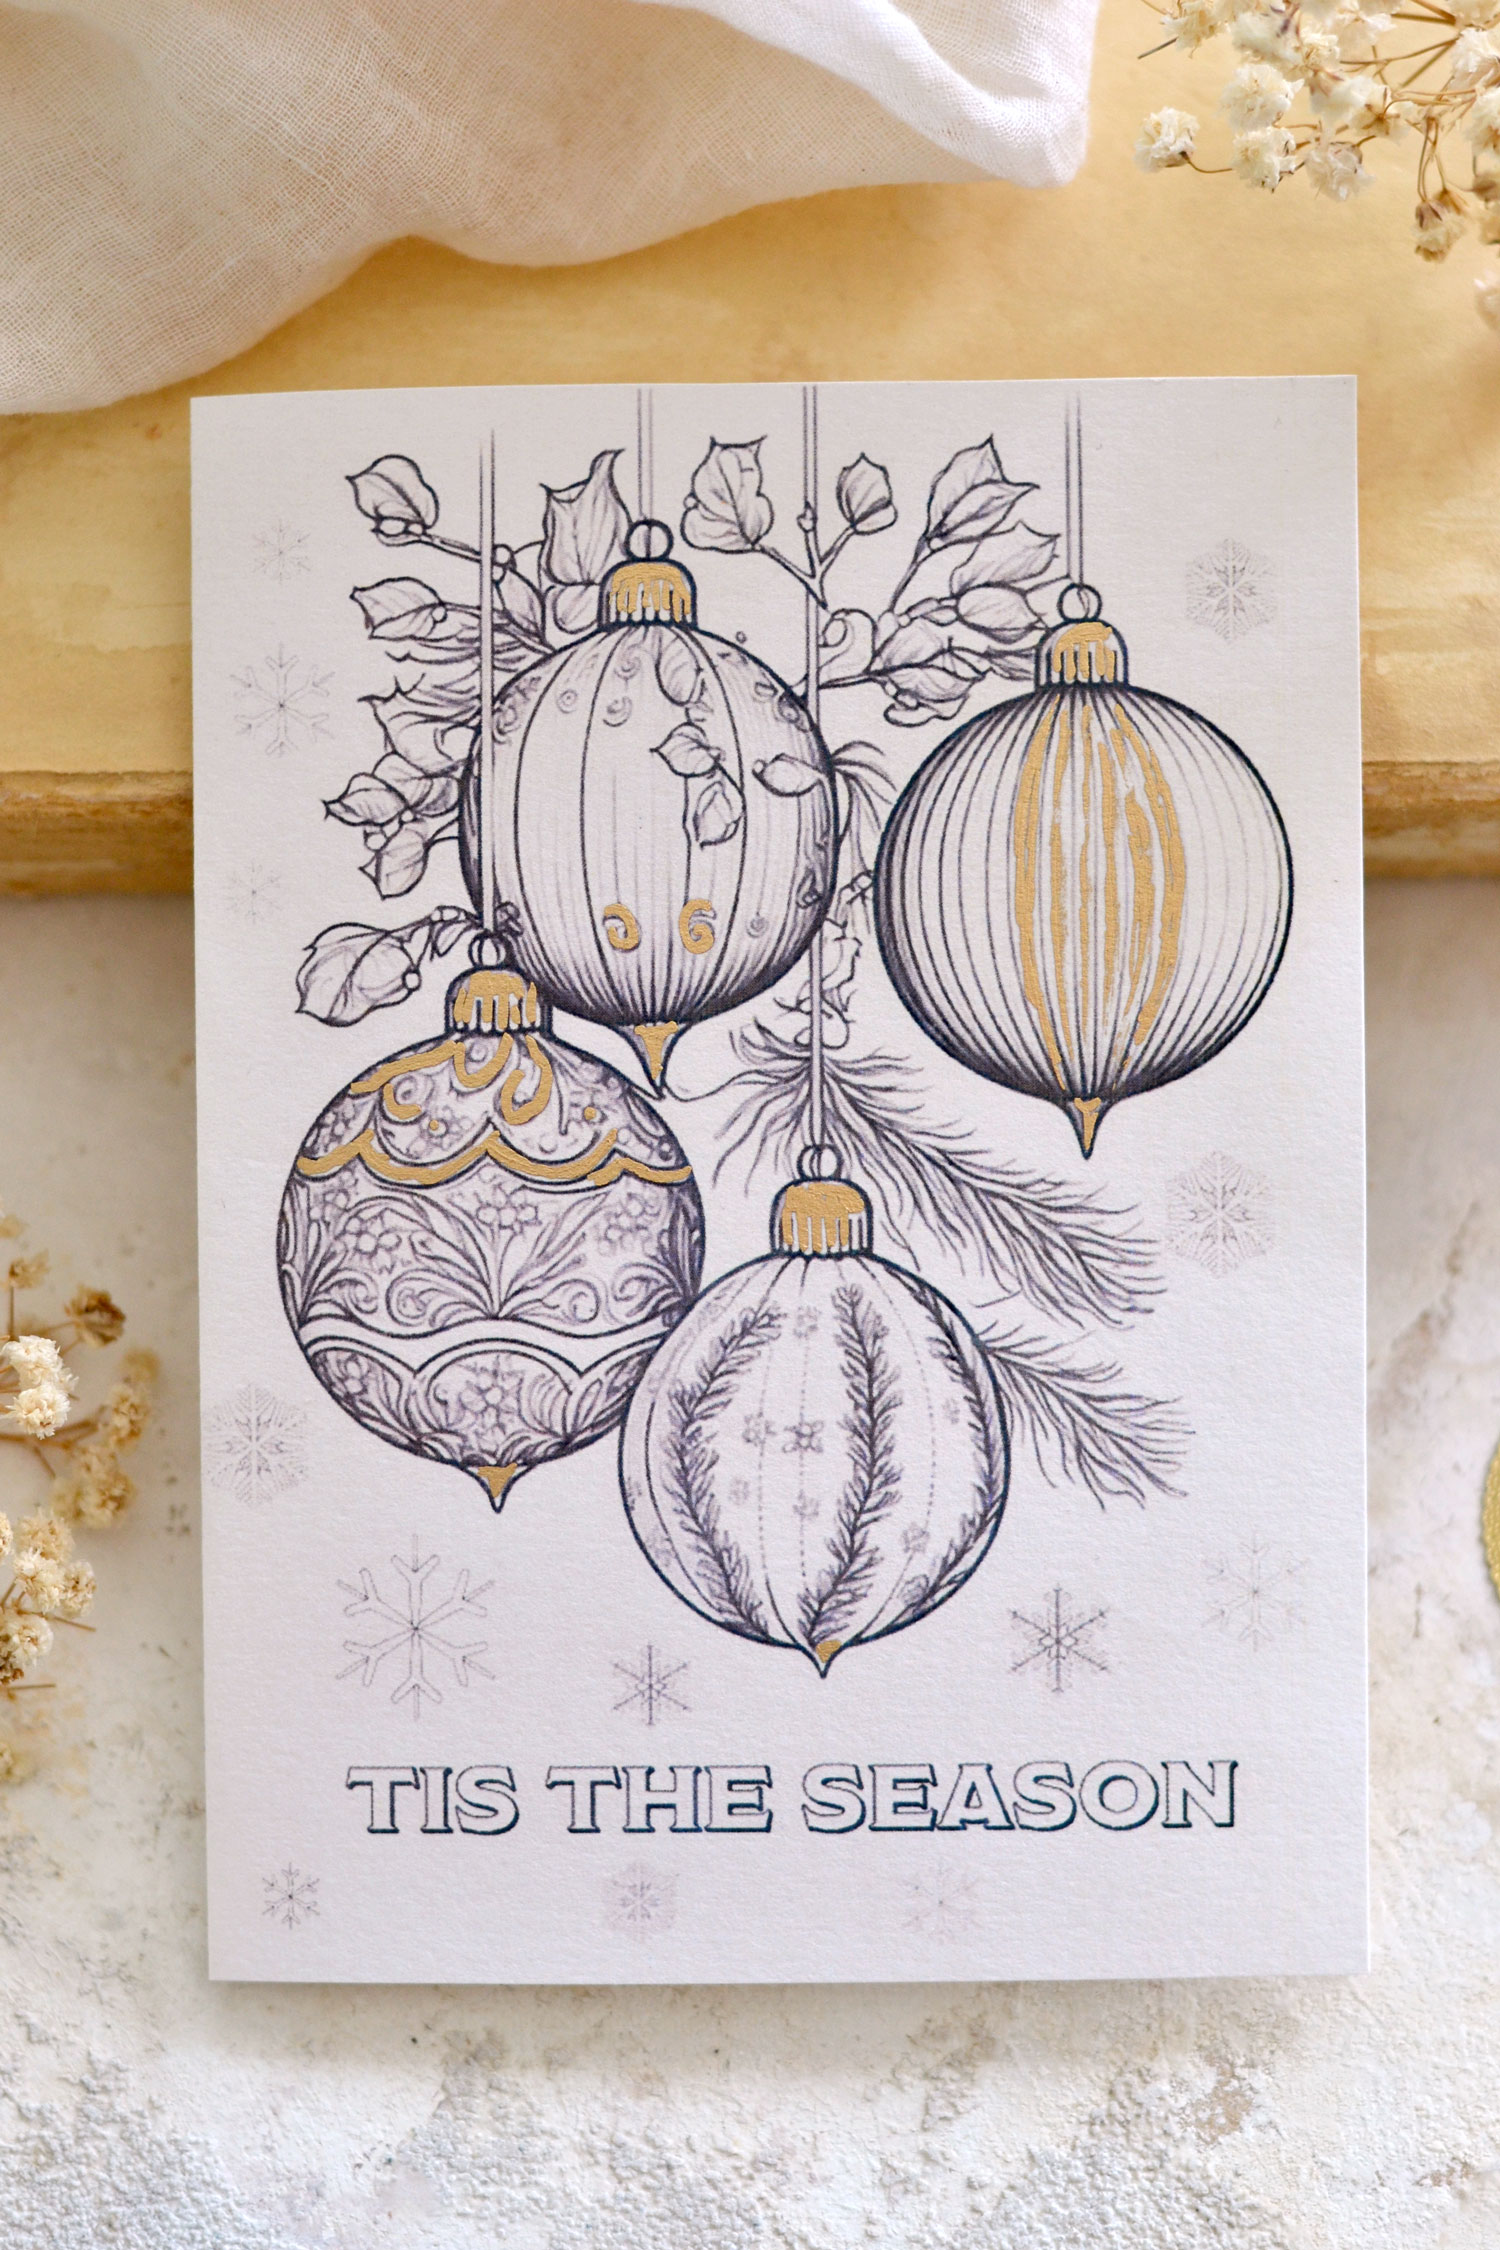 Tis the season Christmas card coloring page